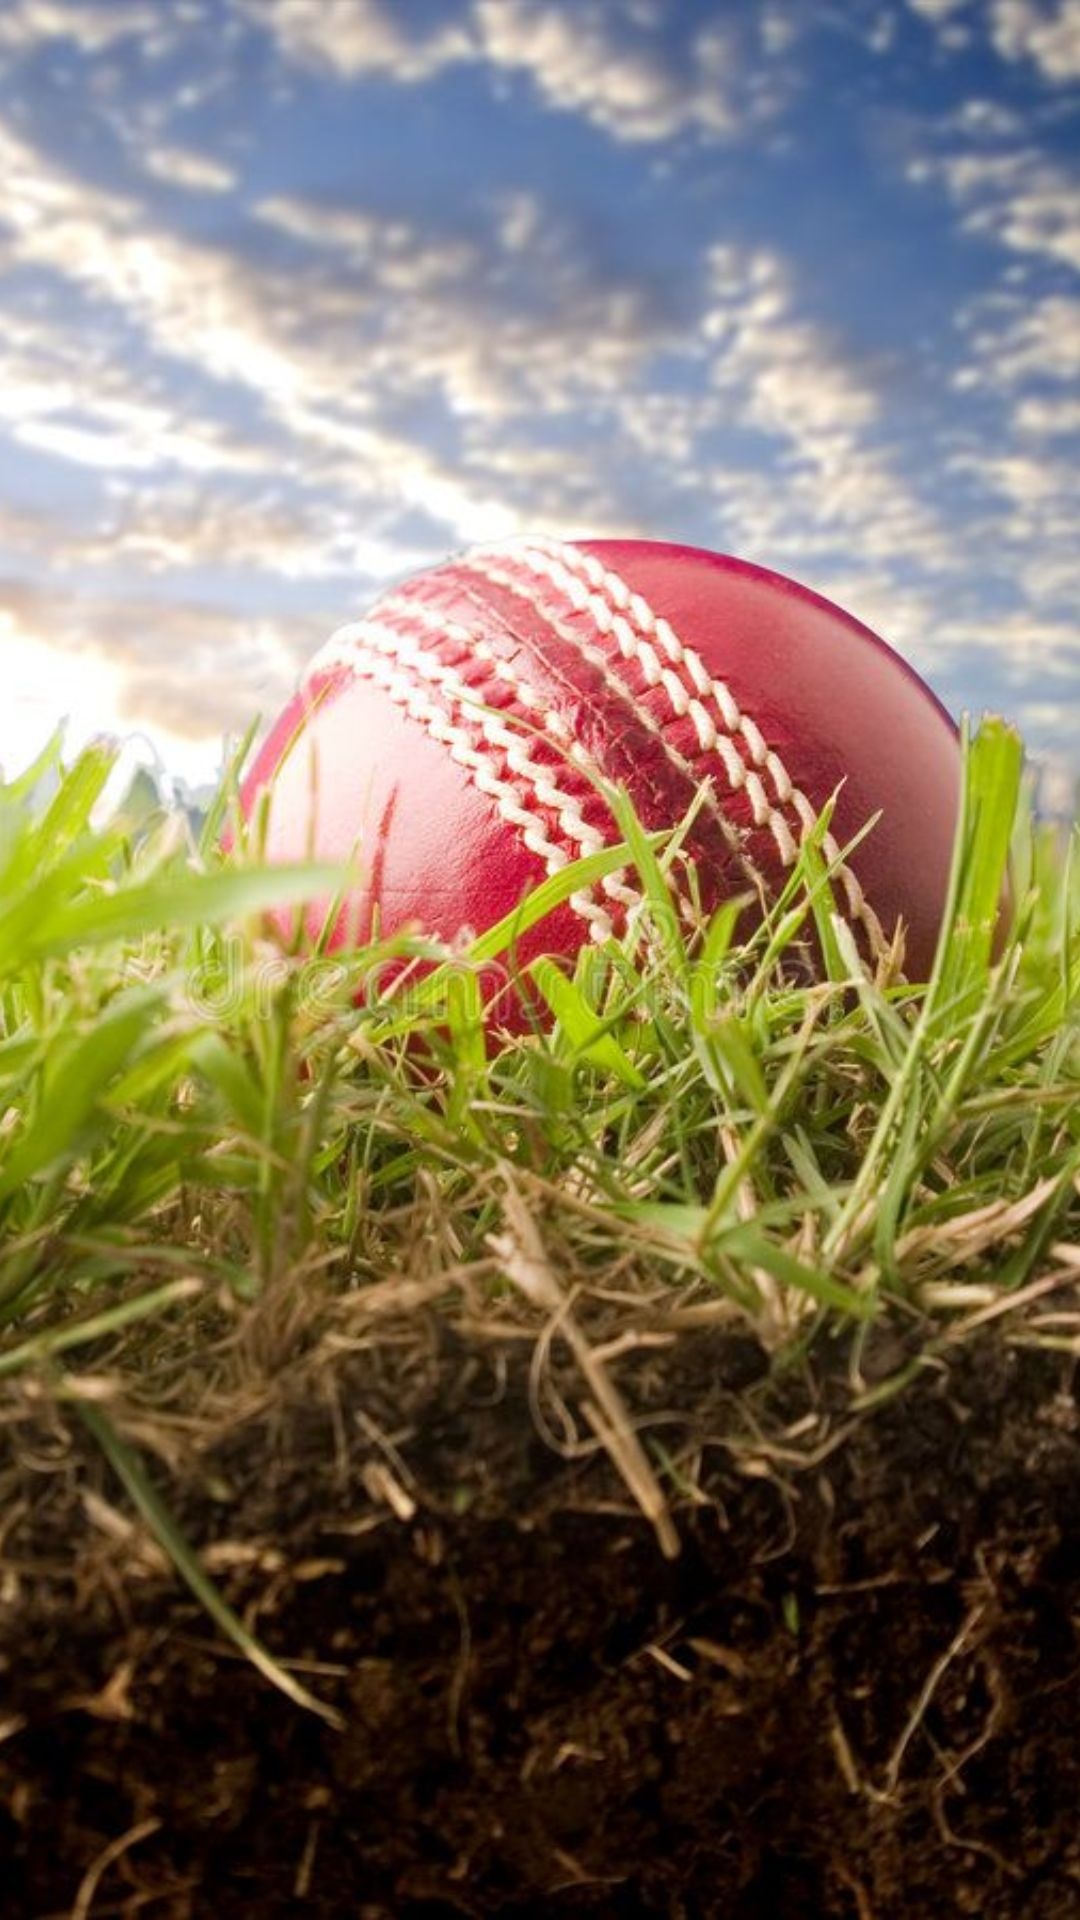 Cricket: First-class level cricket ball - hard and solid ball, Outdoor sports equipment. 1080x1920 Full HD Wallpaper.